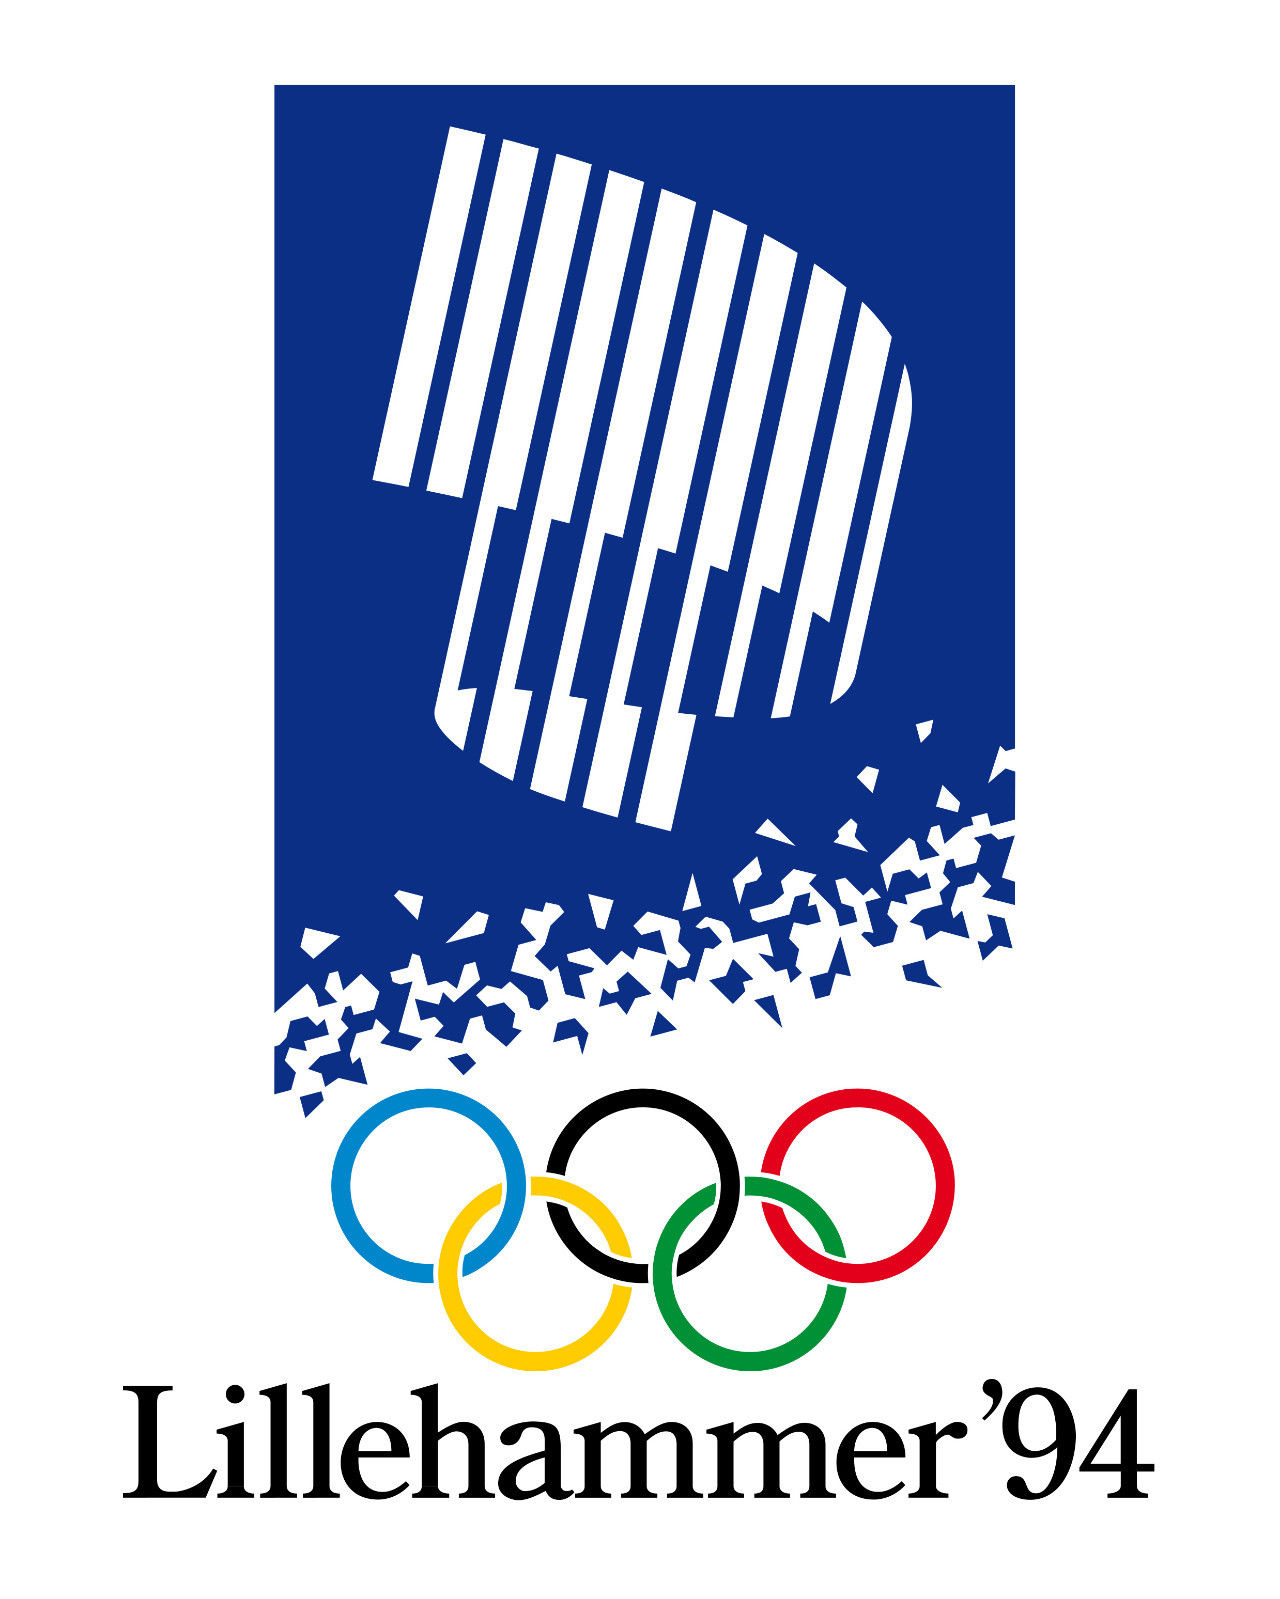 Lillehammer '94: 16 Days of Glory (1994)